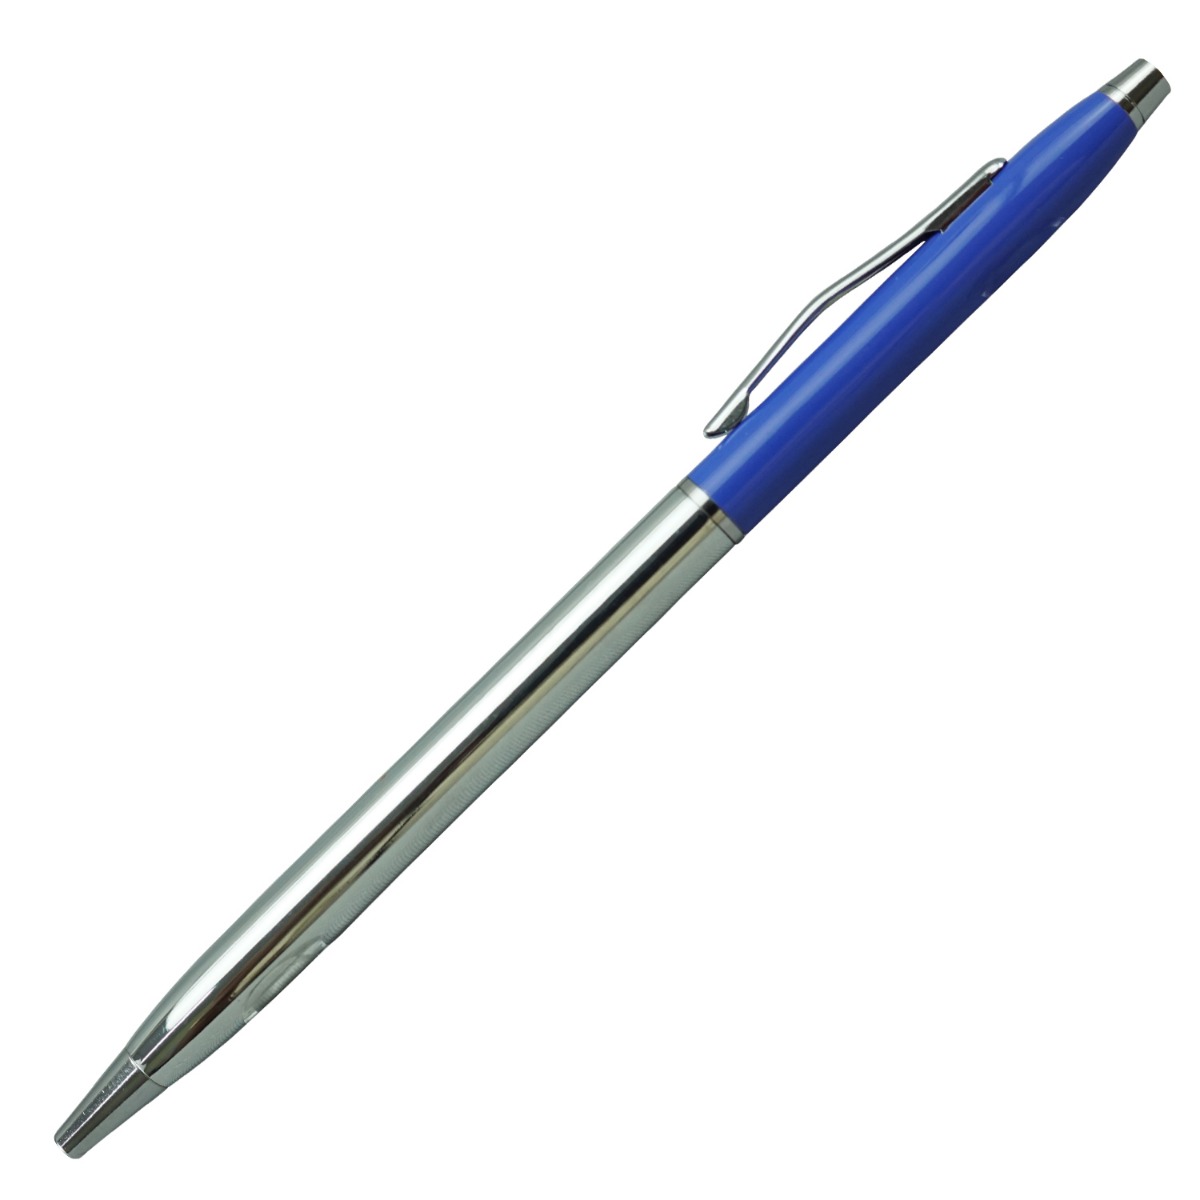 Penhouse Model:16147 Slim Type Silver With Blue  Color  Twist Type Body  Medium Tip  Ball Pen